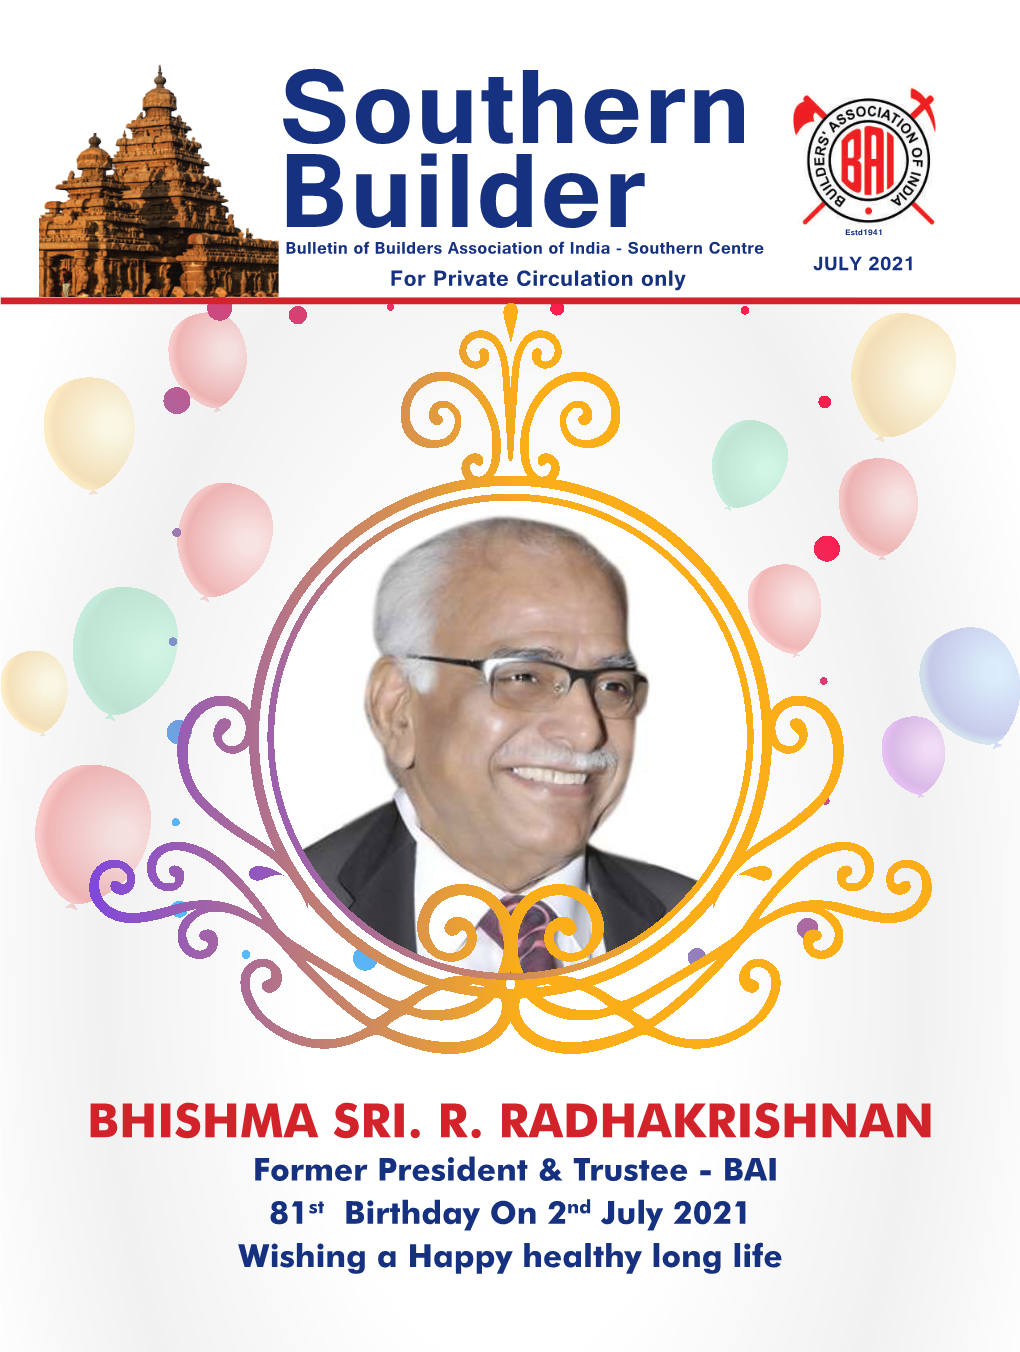 BHISHMA SRI. R. RADHAKRISHNAN Former President & Trustee - BAI 81St Birthday on 2Nd July 2021 Wishing a Happy Healthy Long Life